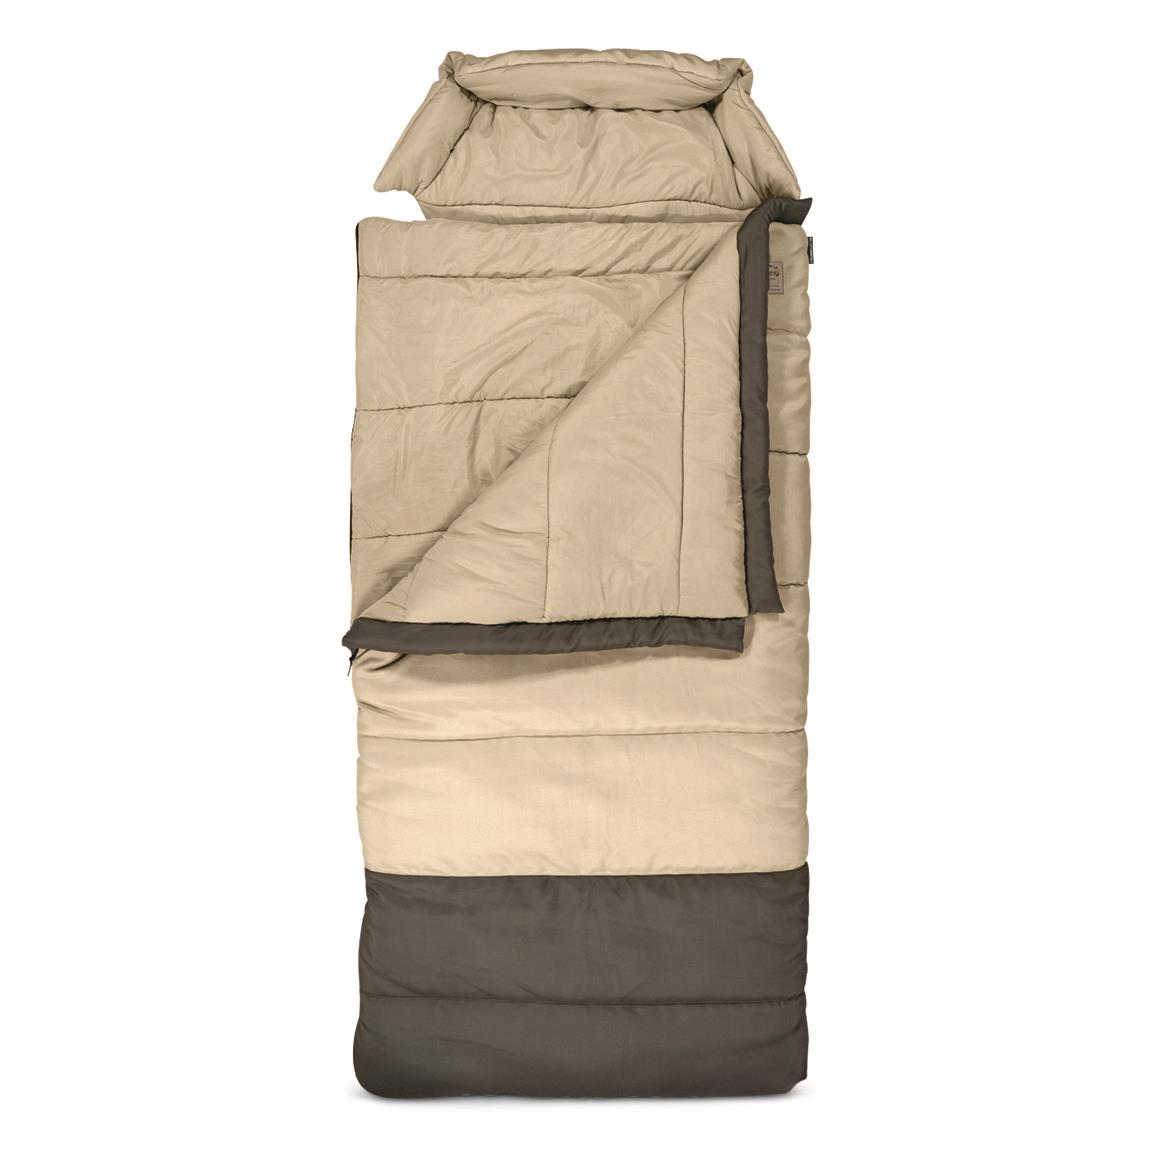 Klymit Big Cottonwood -20ºF Sleeping Bag, Tan